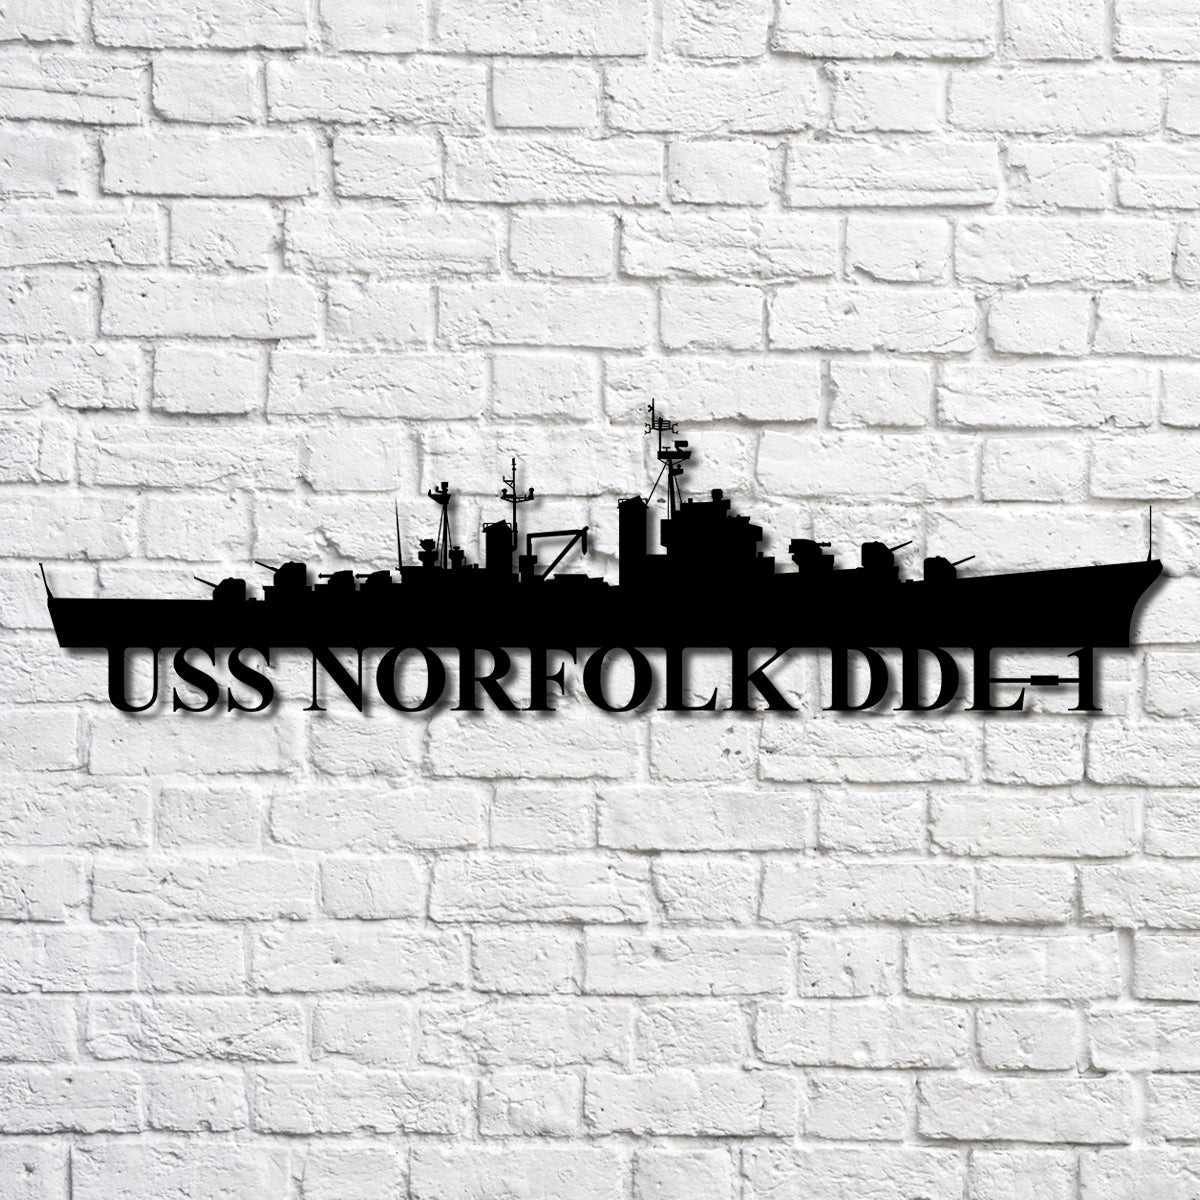 Uss Norfolk Ddl1 Navy Ship Metal Art, Gift For Navy Veteran, Navy Ships Silhouette Metal Art, Navy Home Decor Laser Cut Metal Signs Custom Gift Ideas 12x12IN